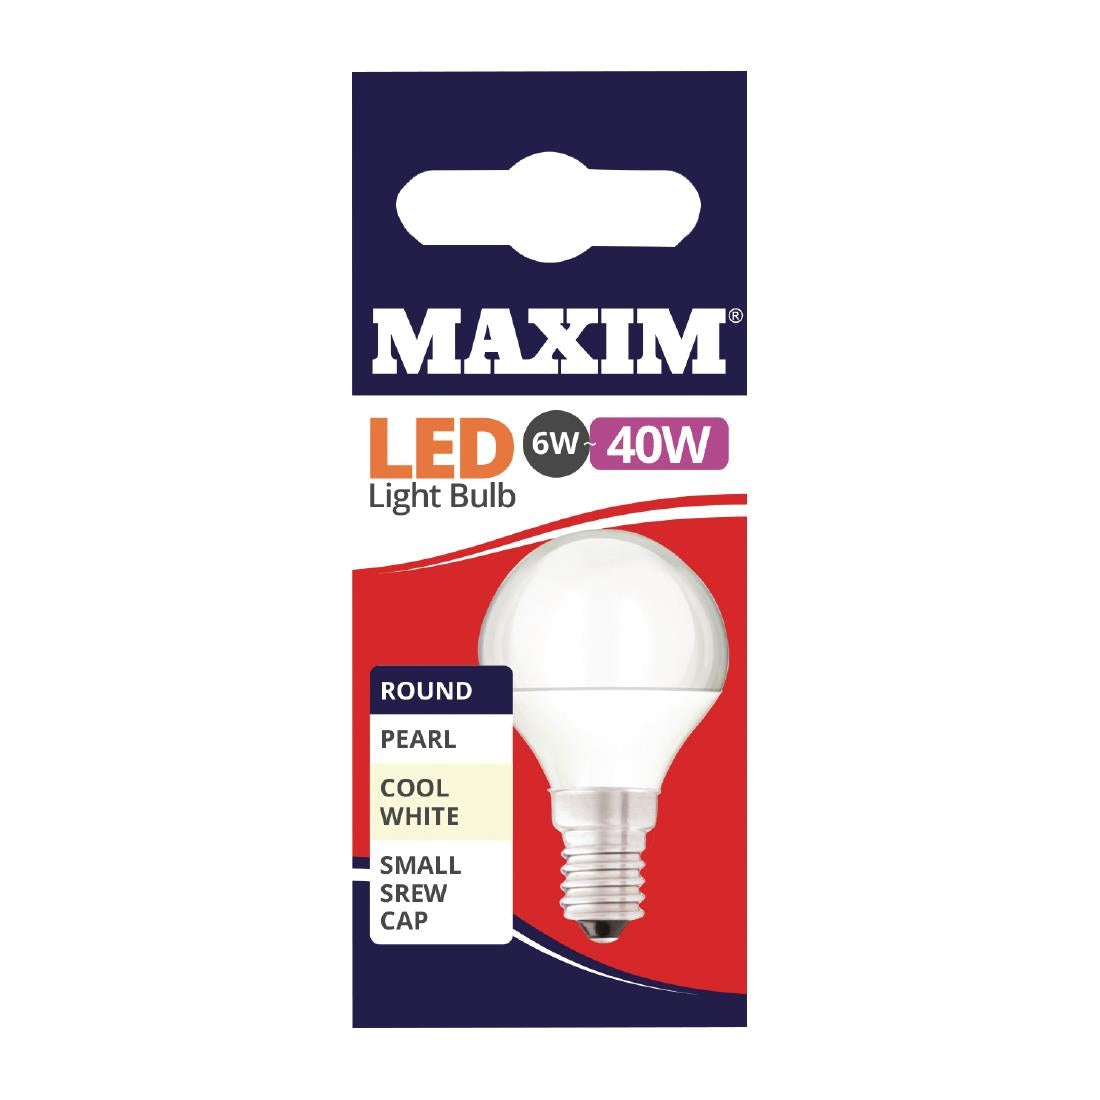 FW515 Maxim LED Round SES Cool White Light Bulb 6/40w JD Catering Equipment Solutions Ltd